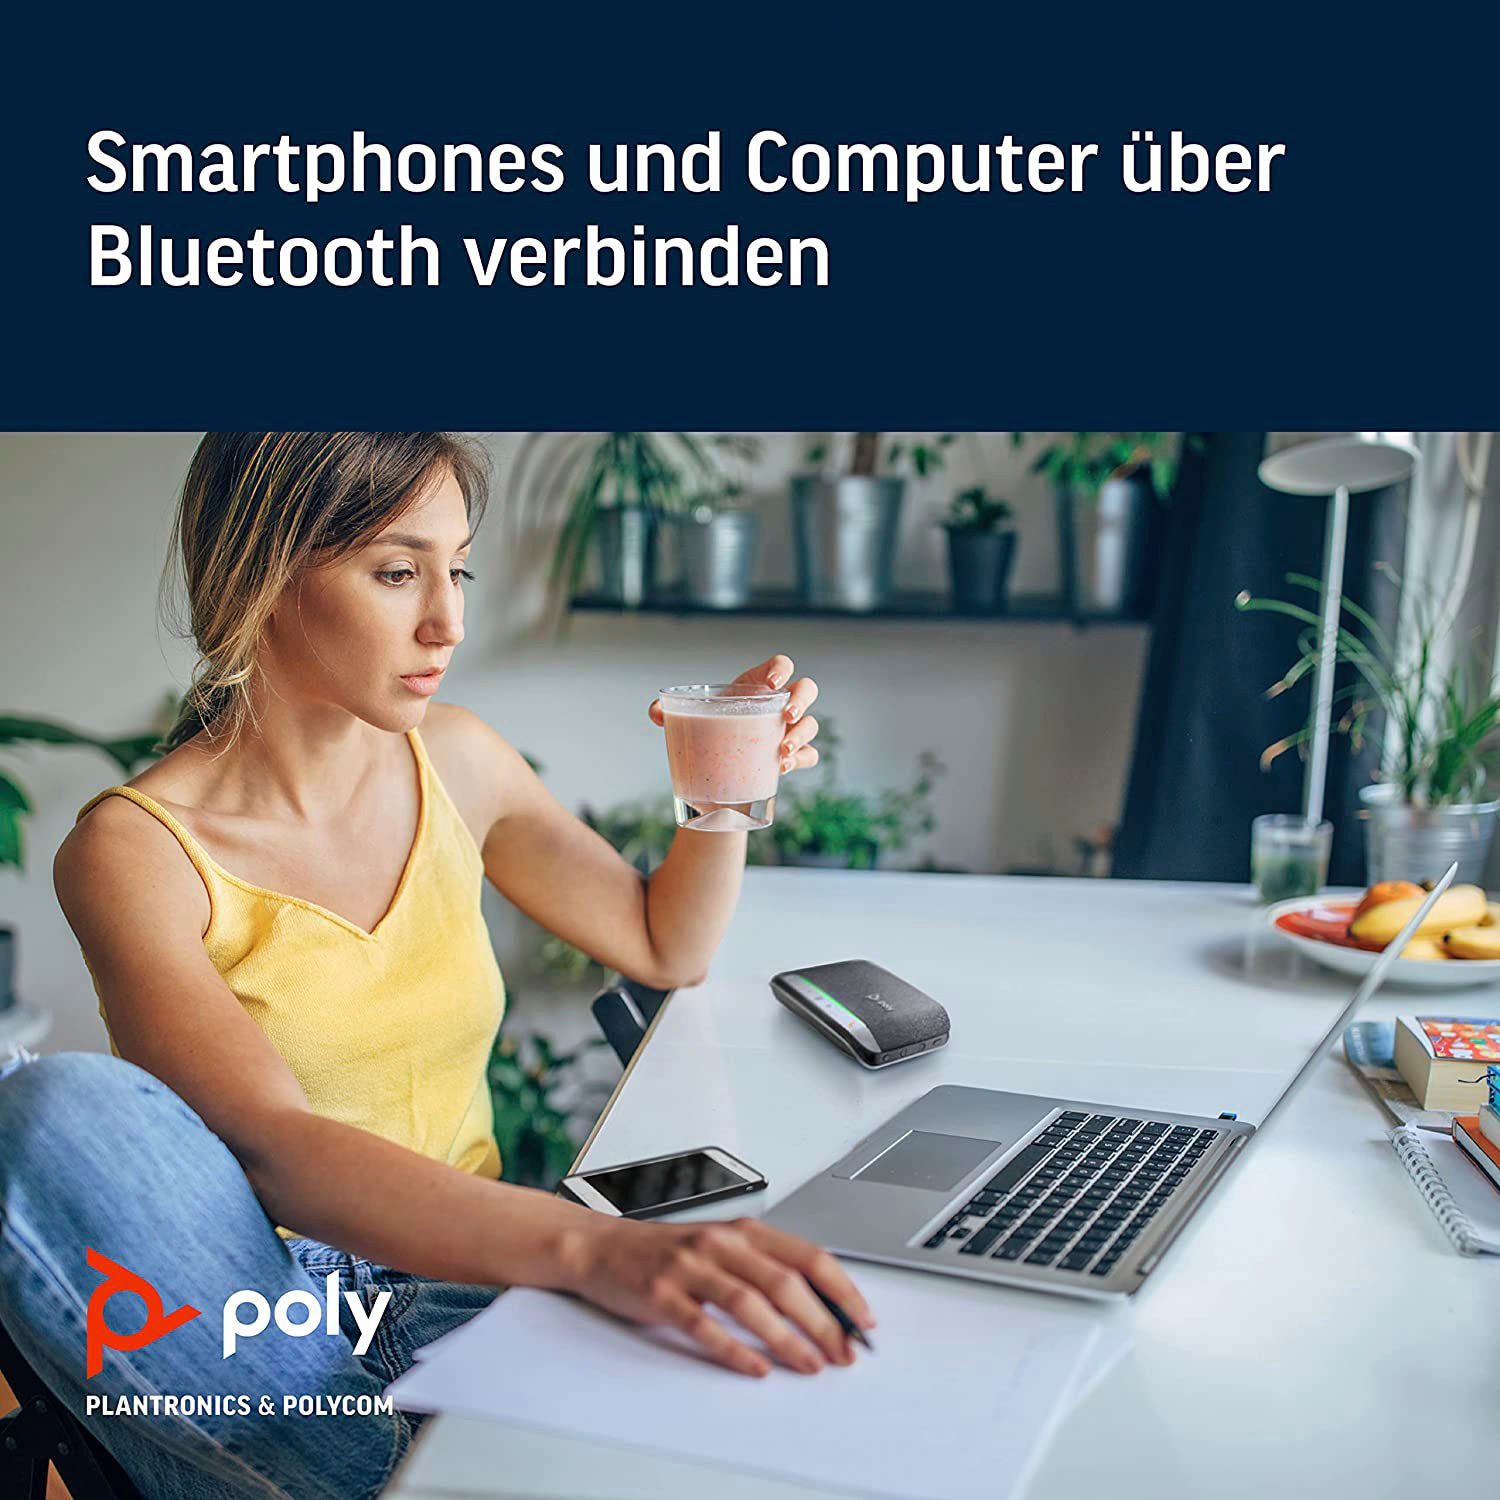 Poly SYNC Lautsprecher AVRCP (A2DP 20 Bluetooth) Bluetooth